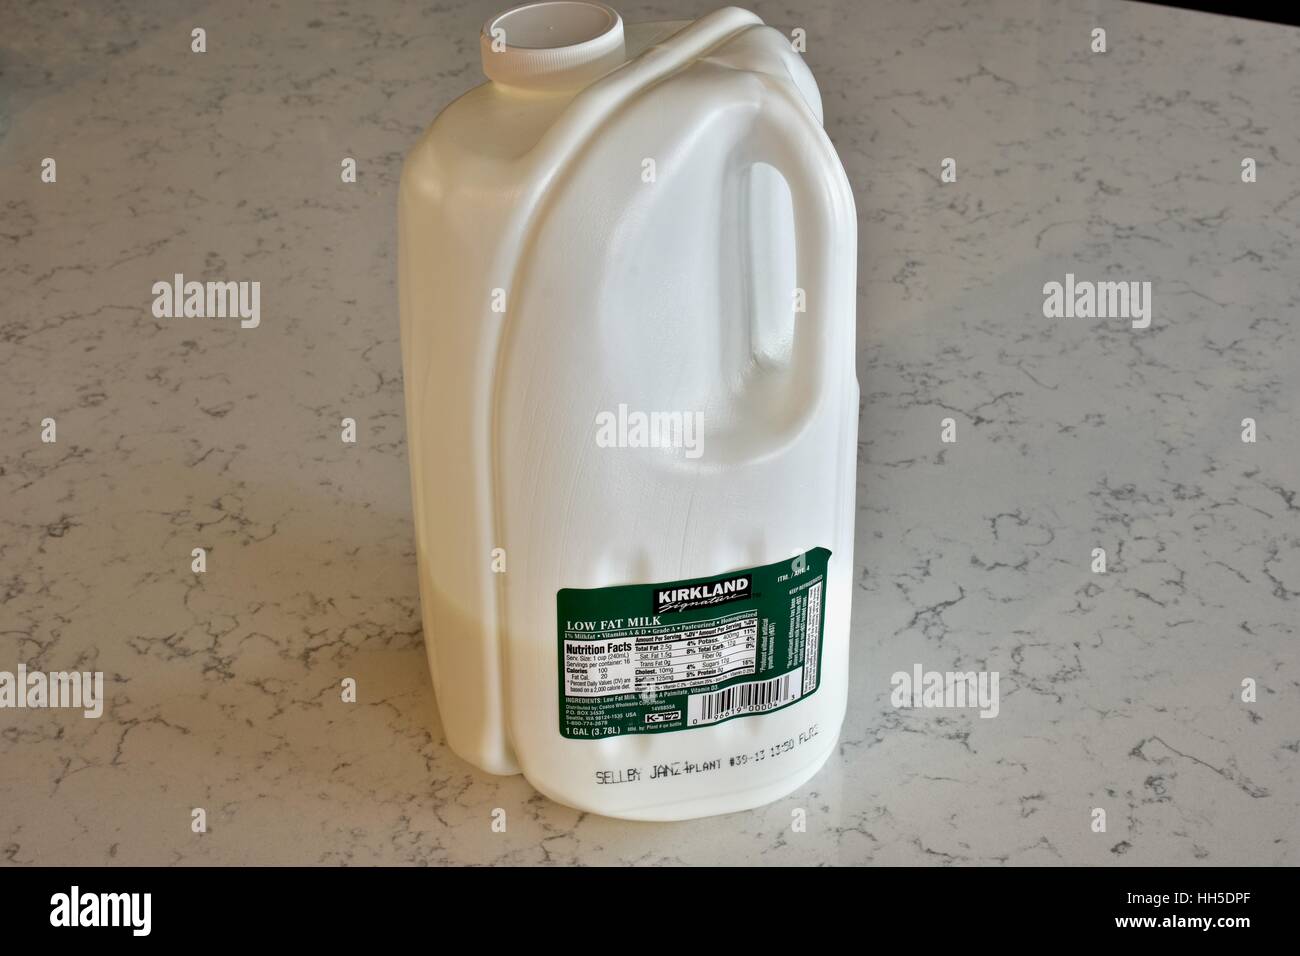 https://c8.alamy.com/comp/HH5DPF/a-kirkland-brand-gallon-of-milk-on-a-white-marble-surface-HH5DPF.jpg